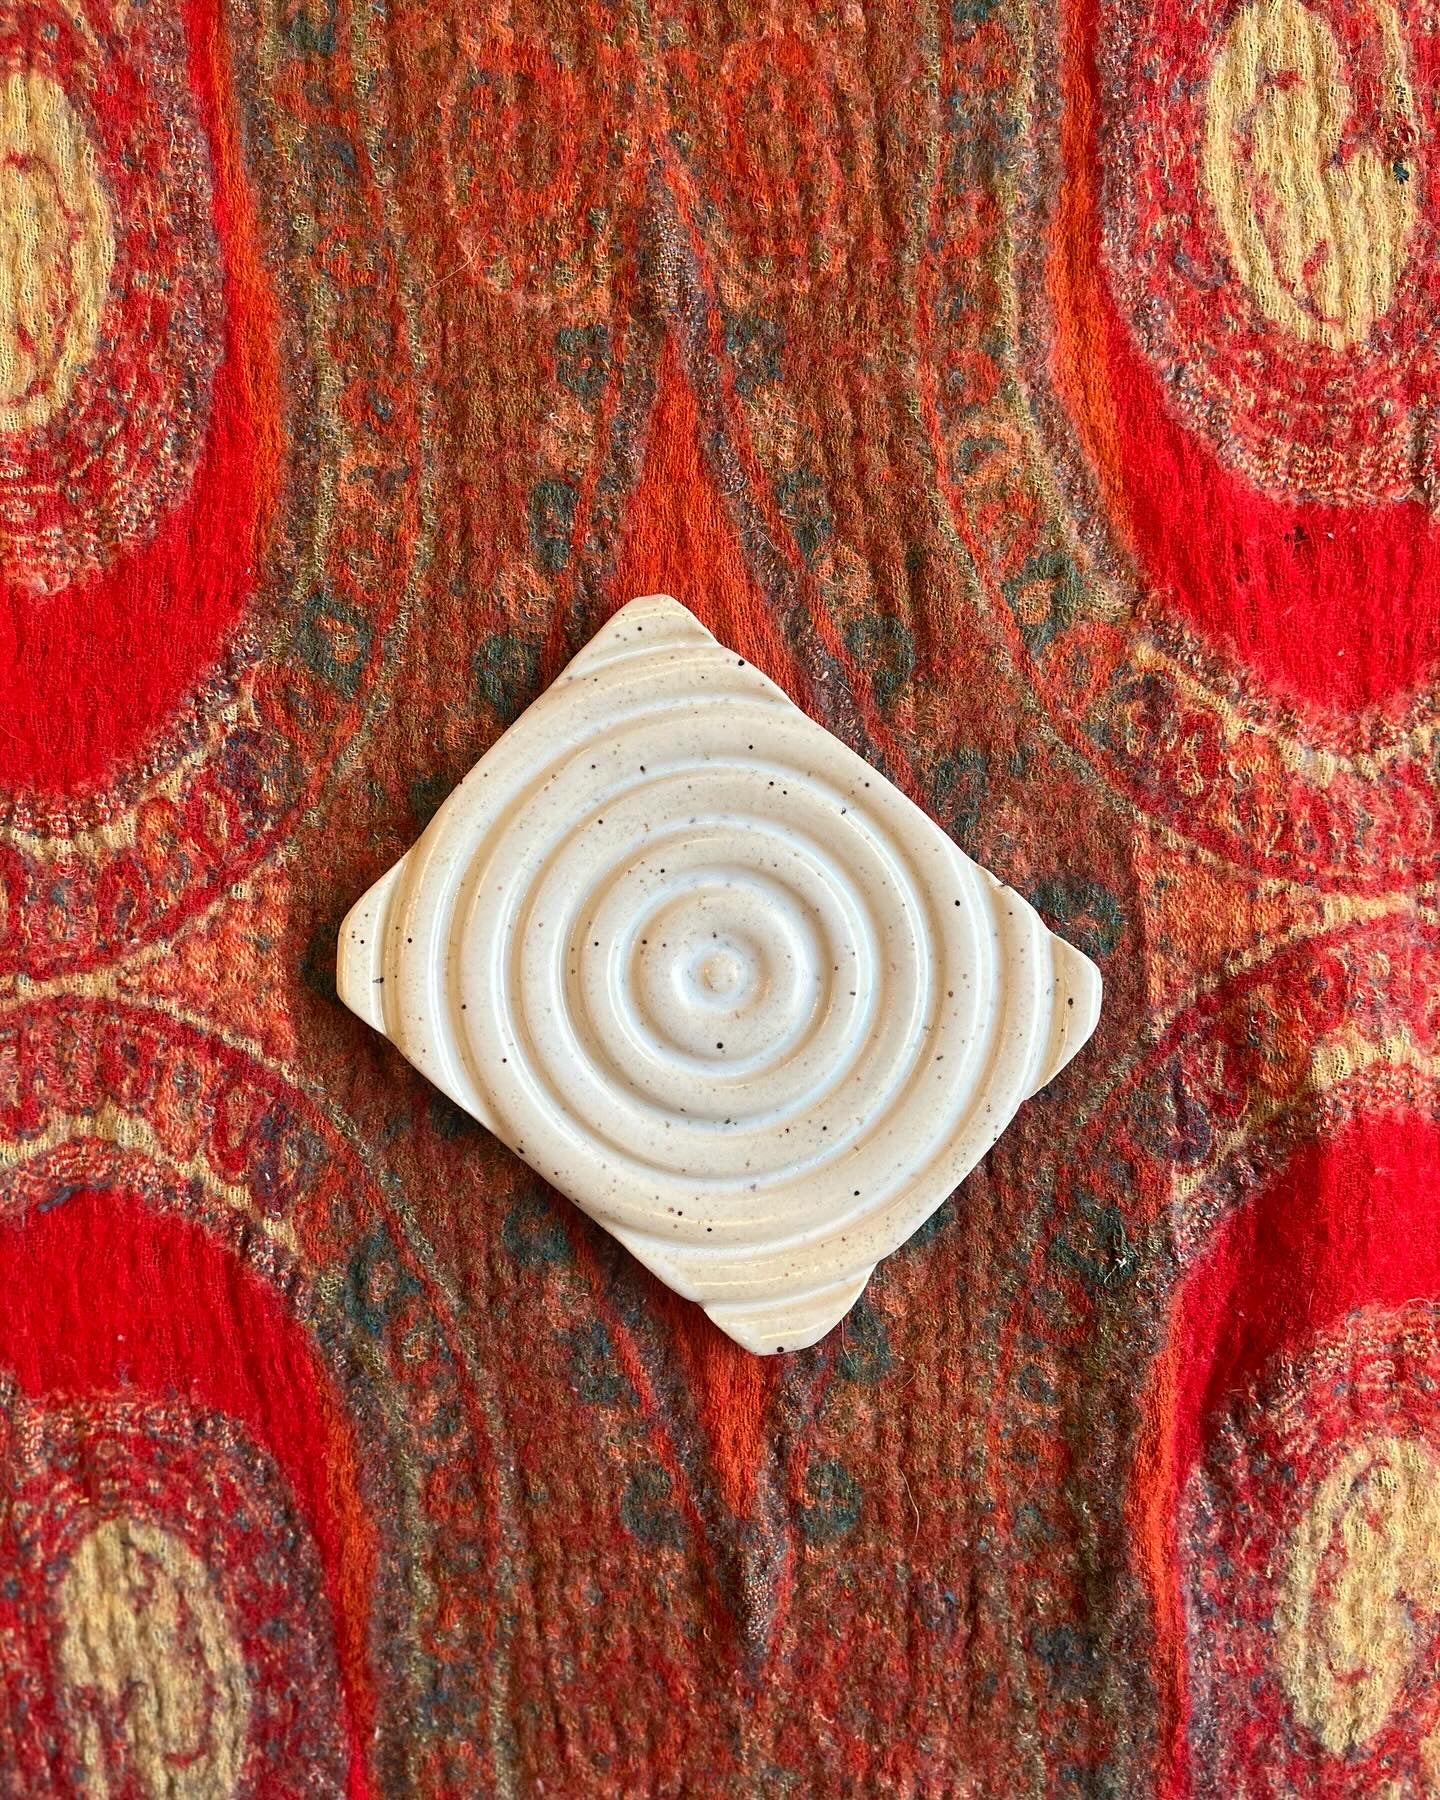 Handmade Ceramic Soap Dish - New!